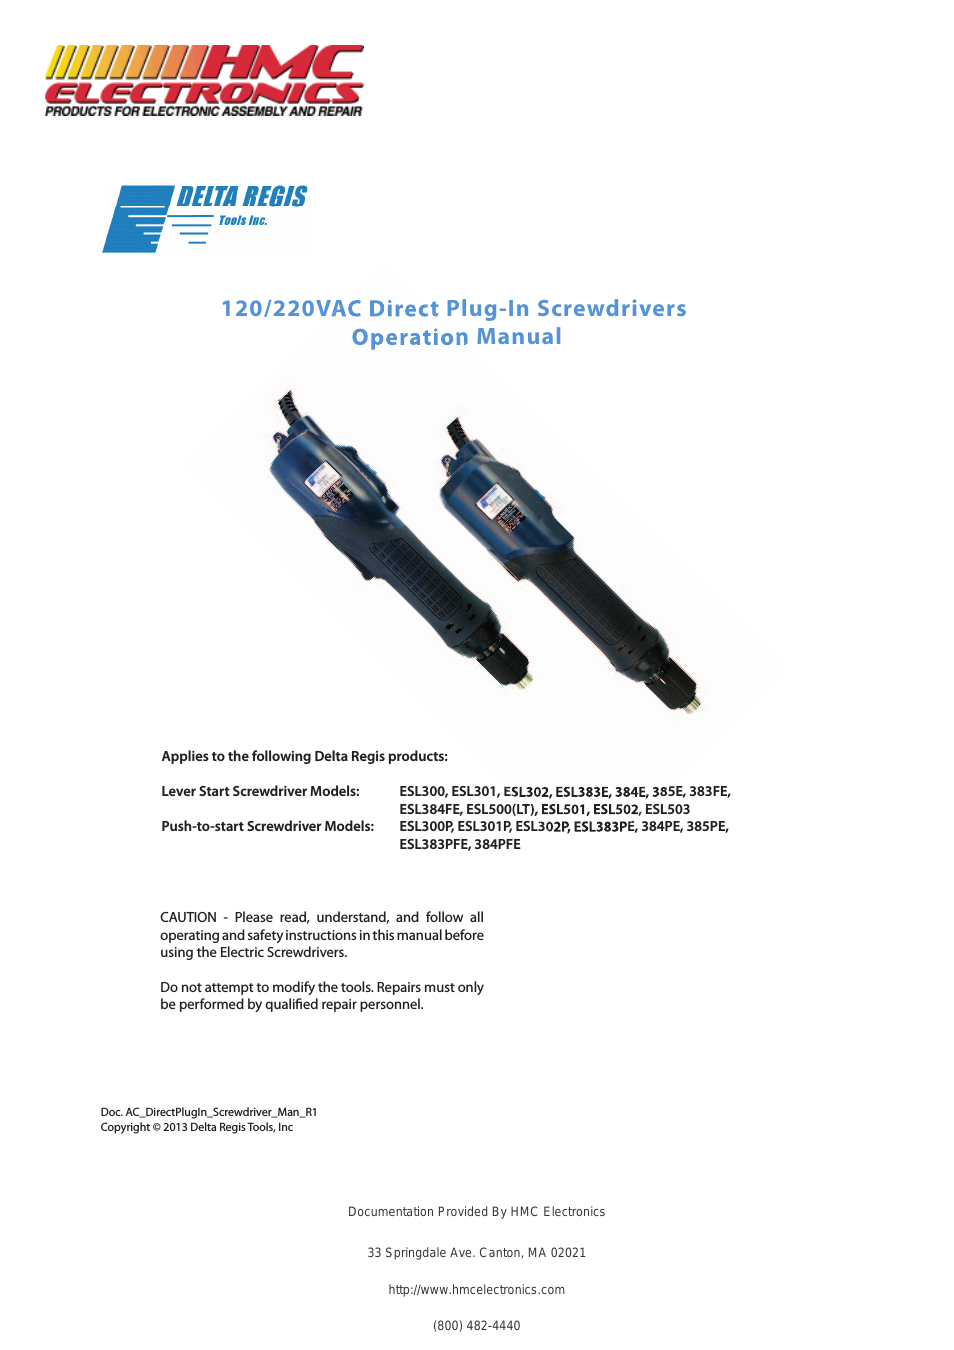 ESL300 Delta Regis Electric Screwdriver, Direct Plug-in